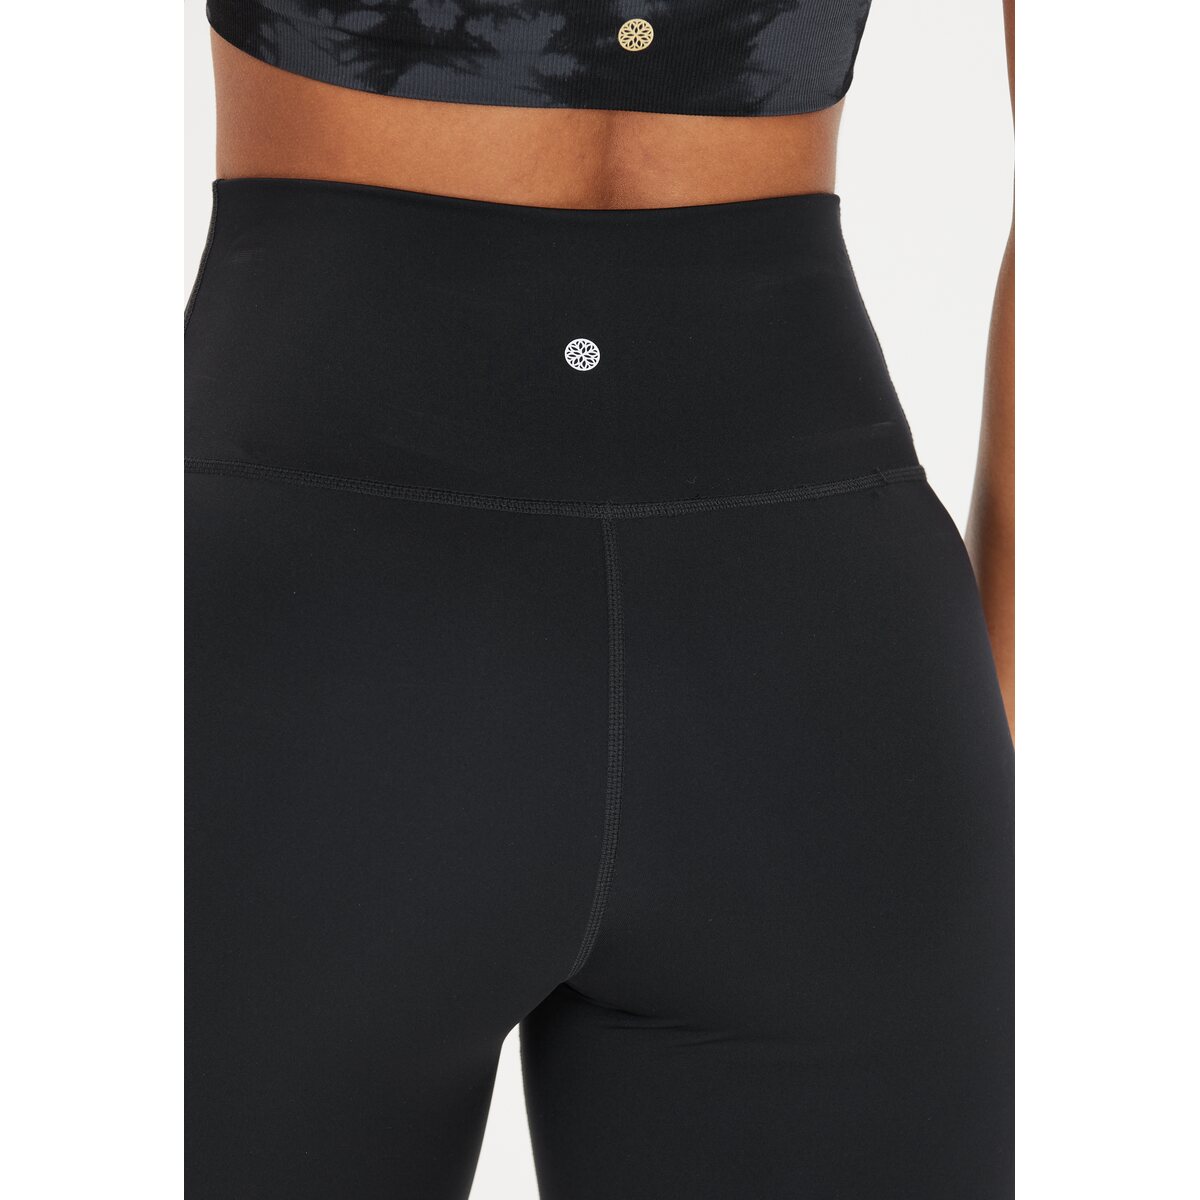 Athlecia Franz Womenswear Tights - Black 5 Shaws Department Stores